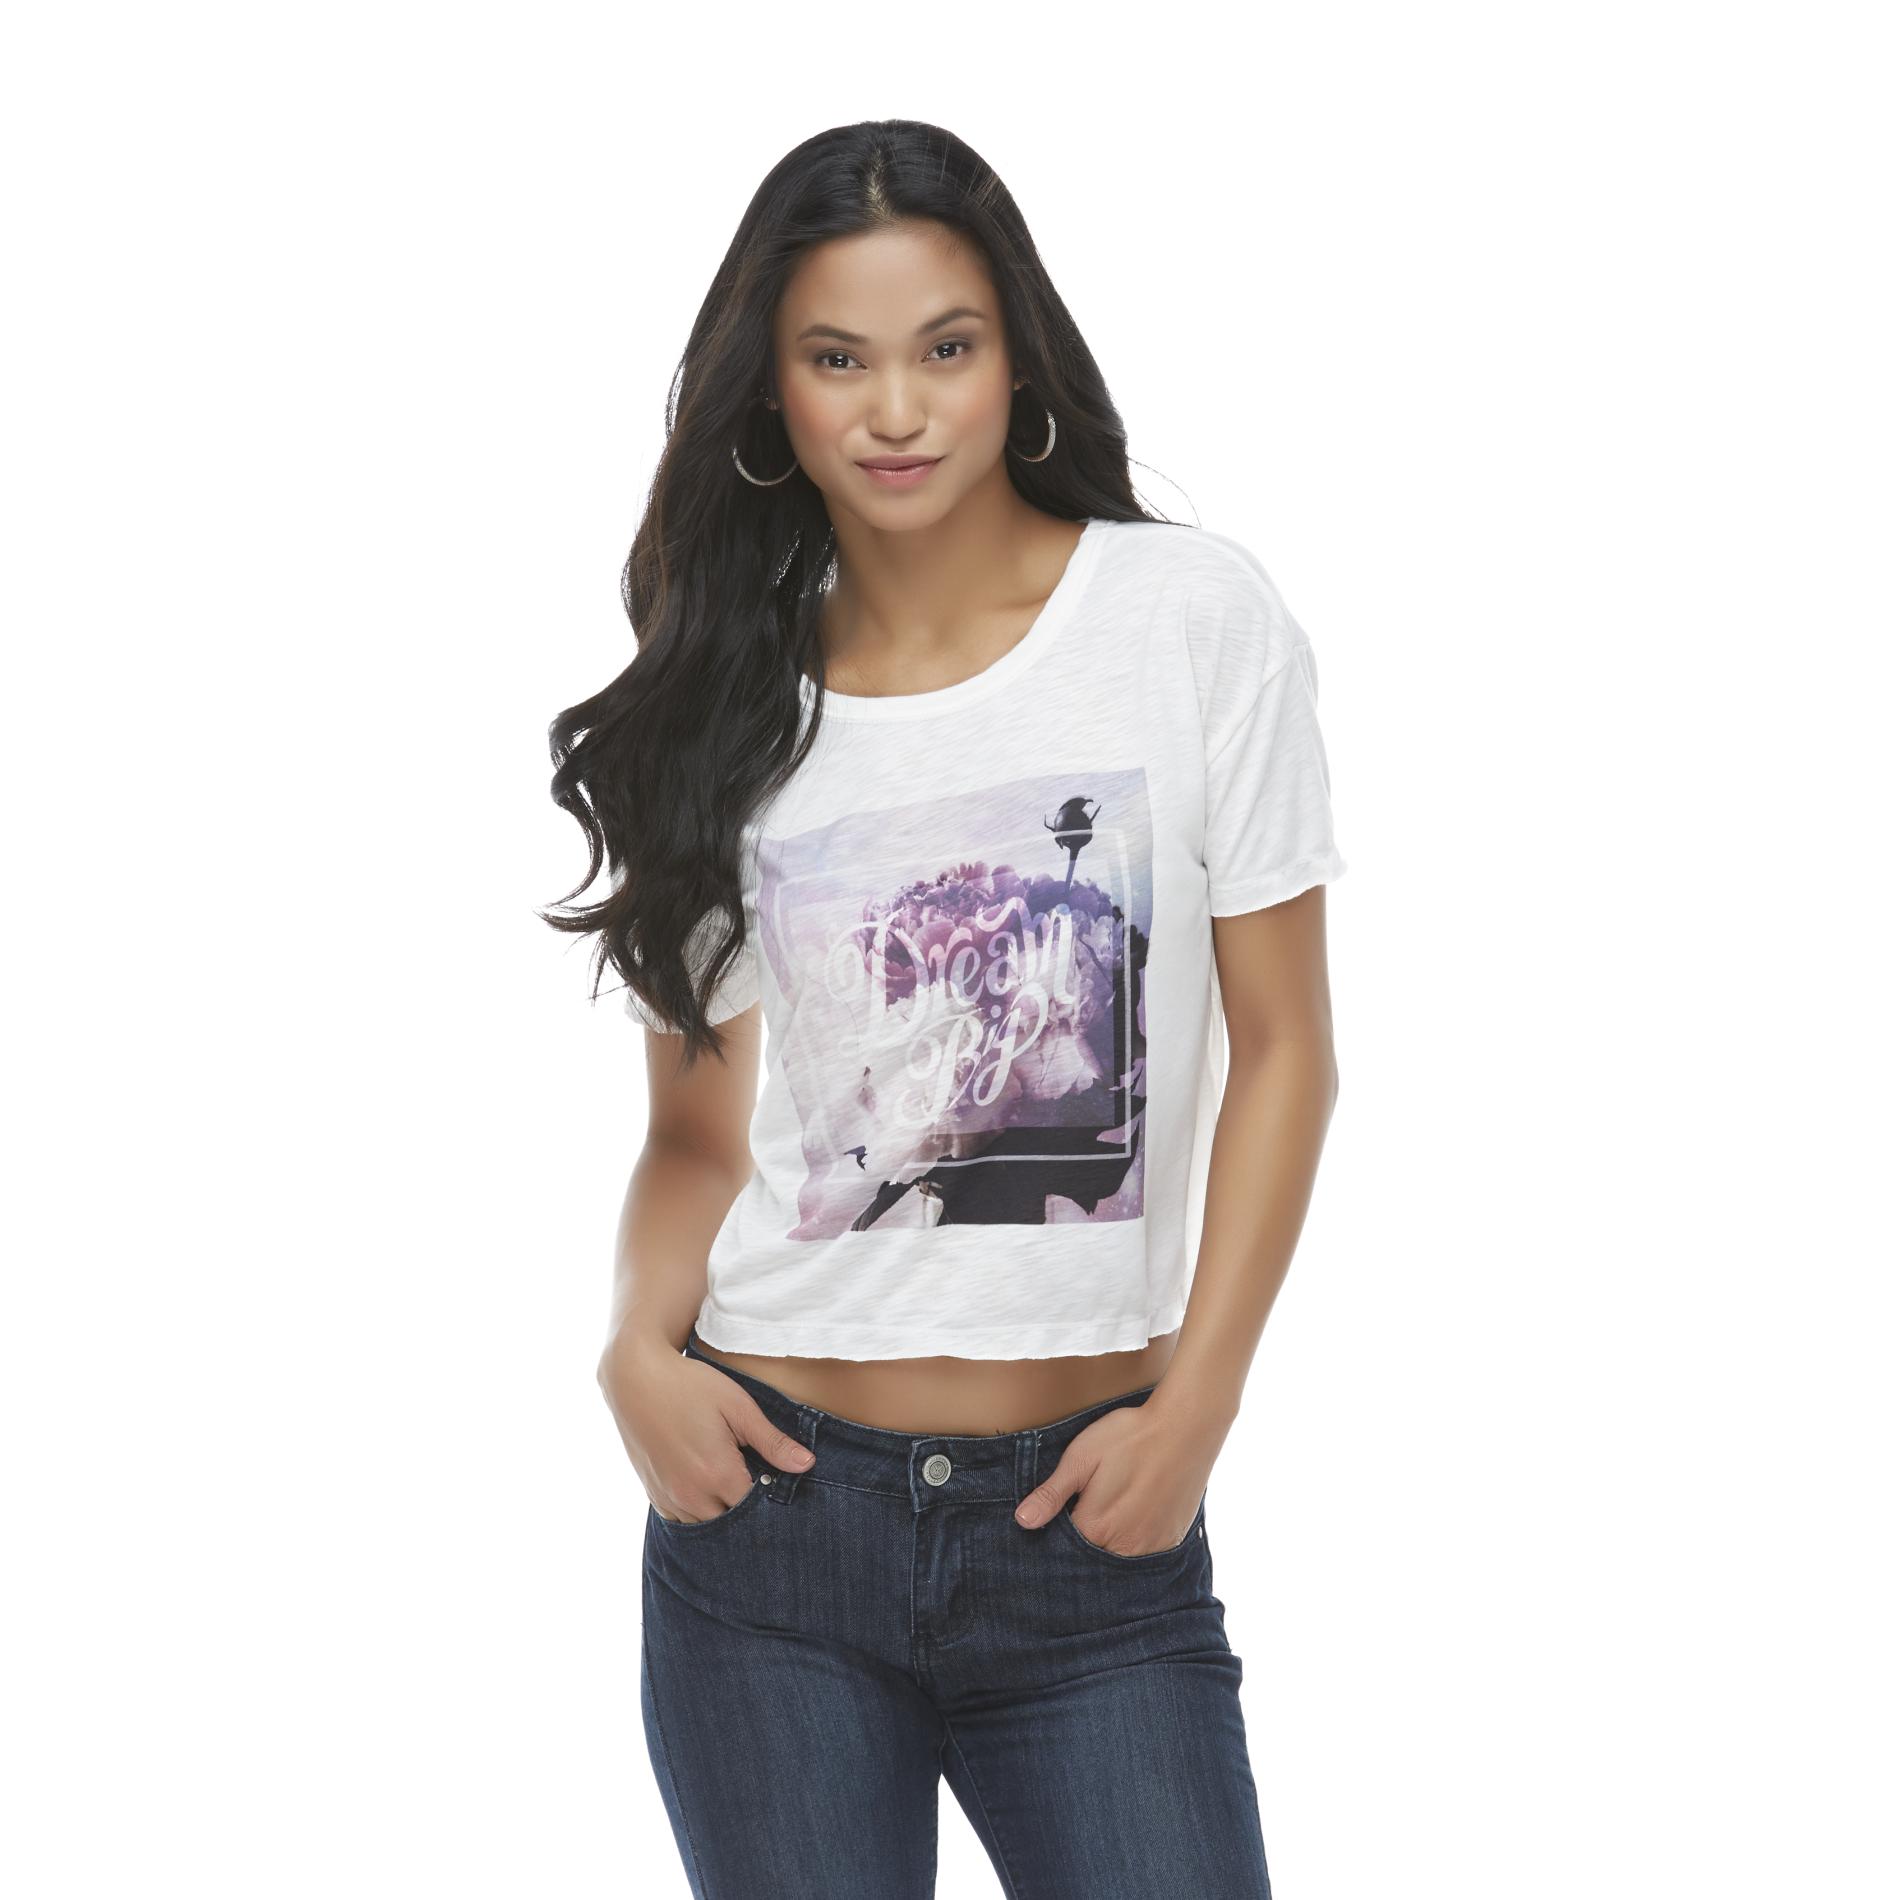 Route 66 Women's Slub Knit Graphic T-Shirt - Dream Big